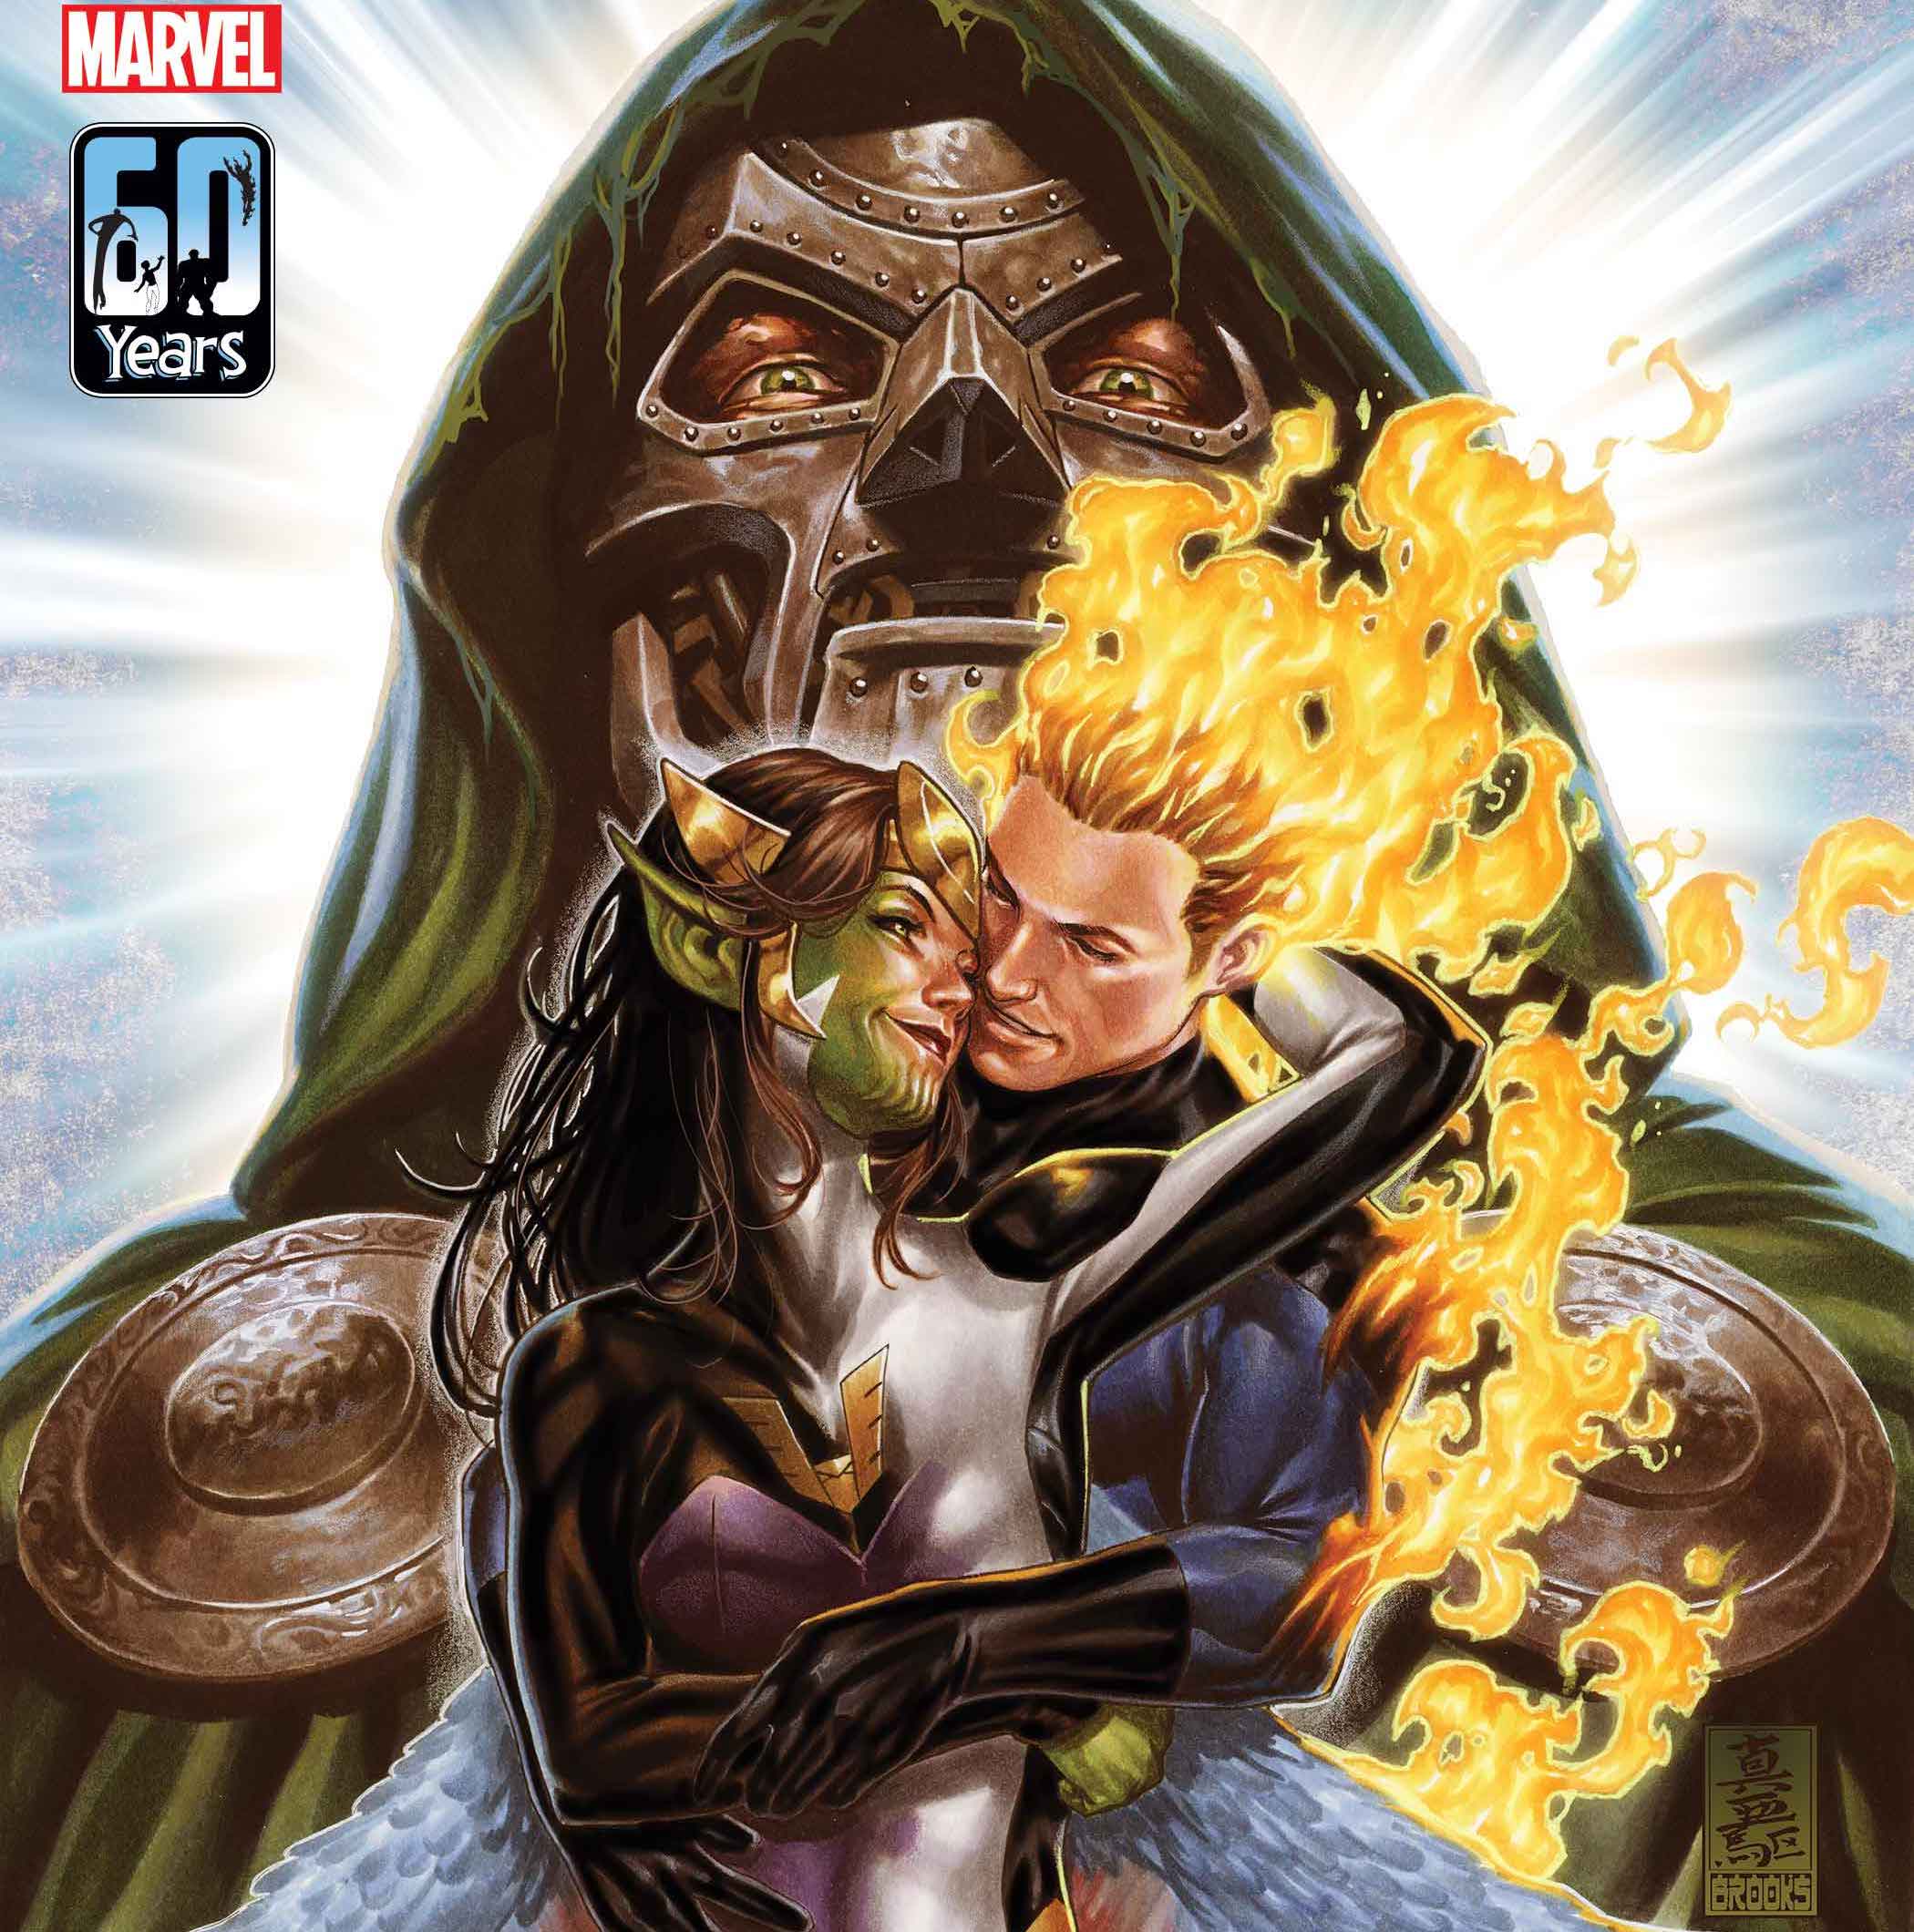 Marvel kicking off the 'Bride of Doom' saga with 'Fantastic Four' #32